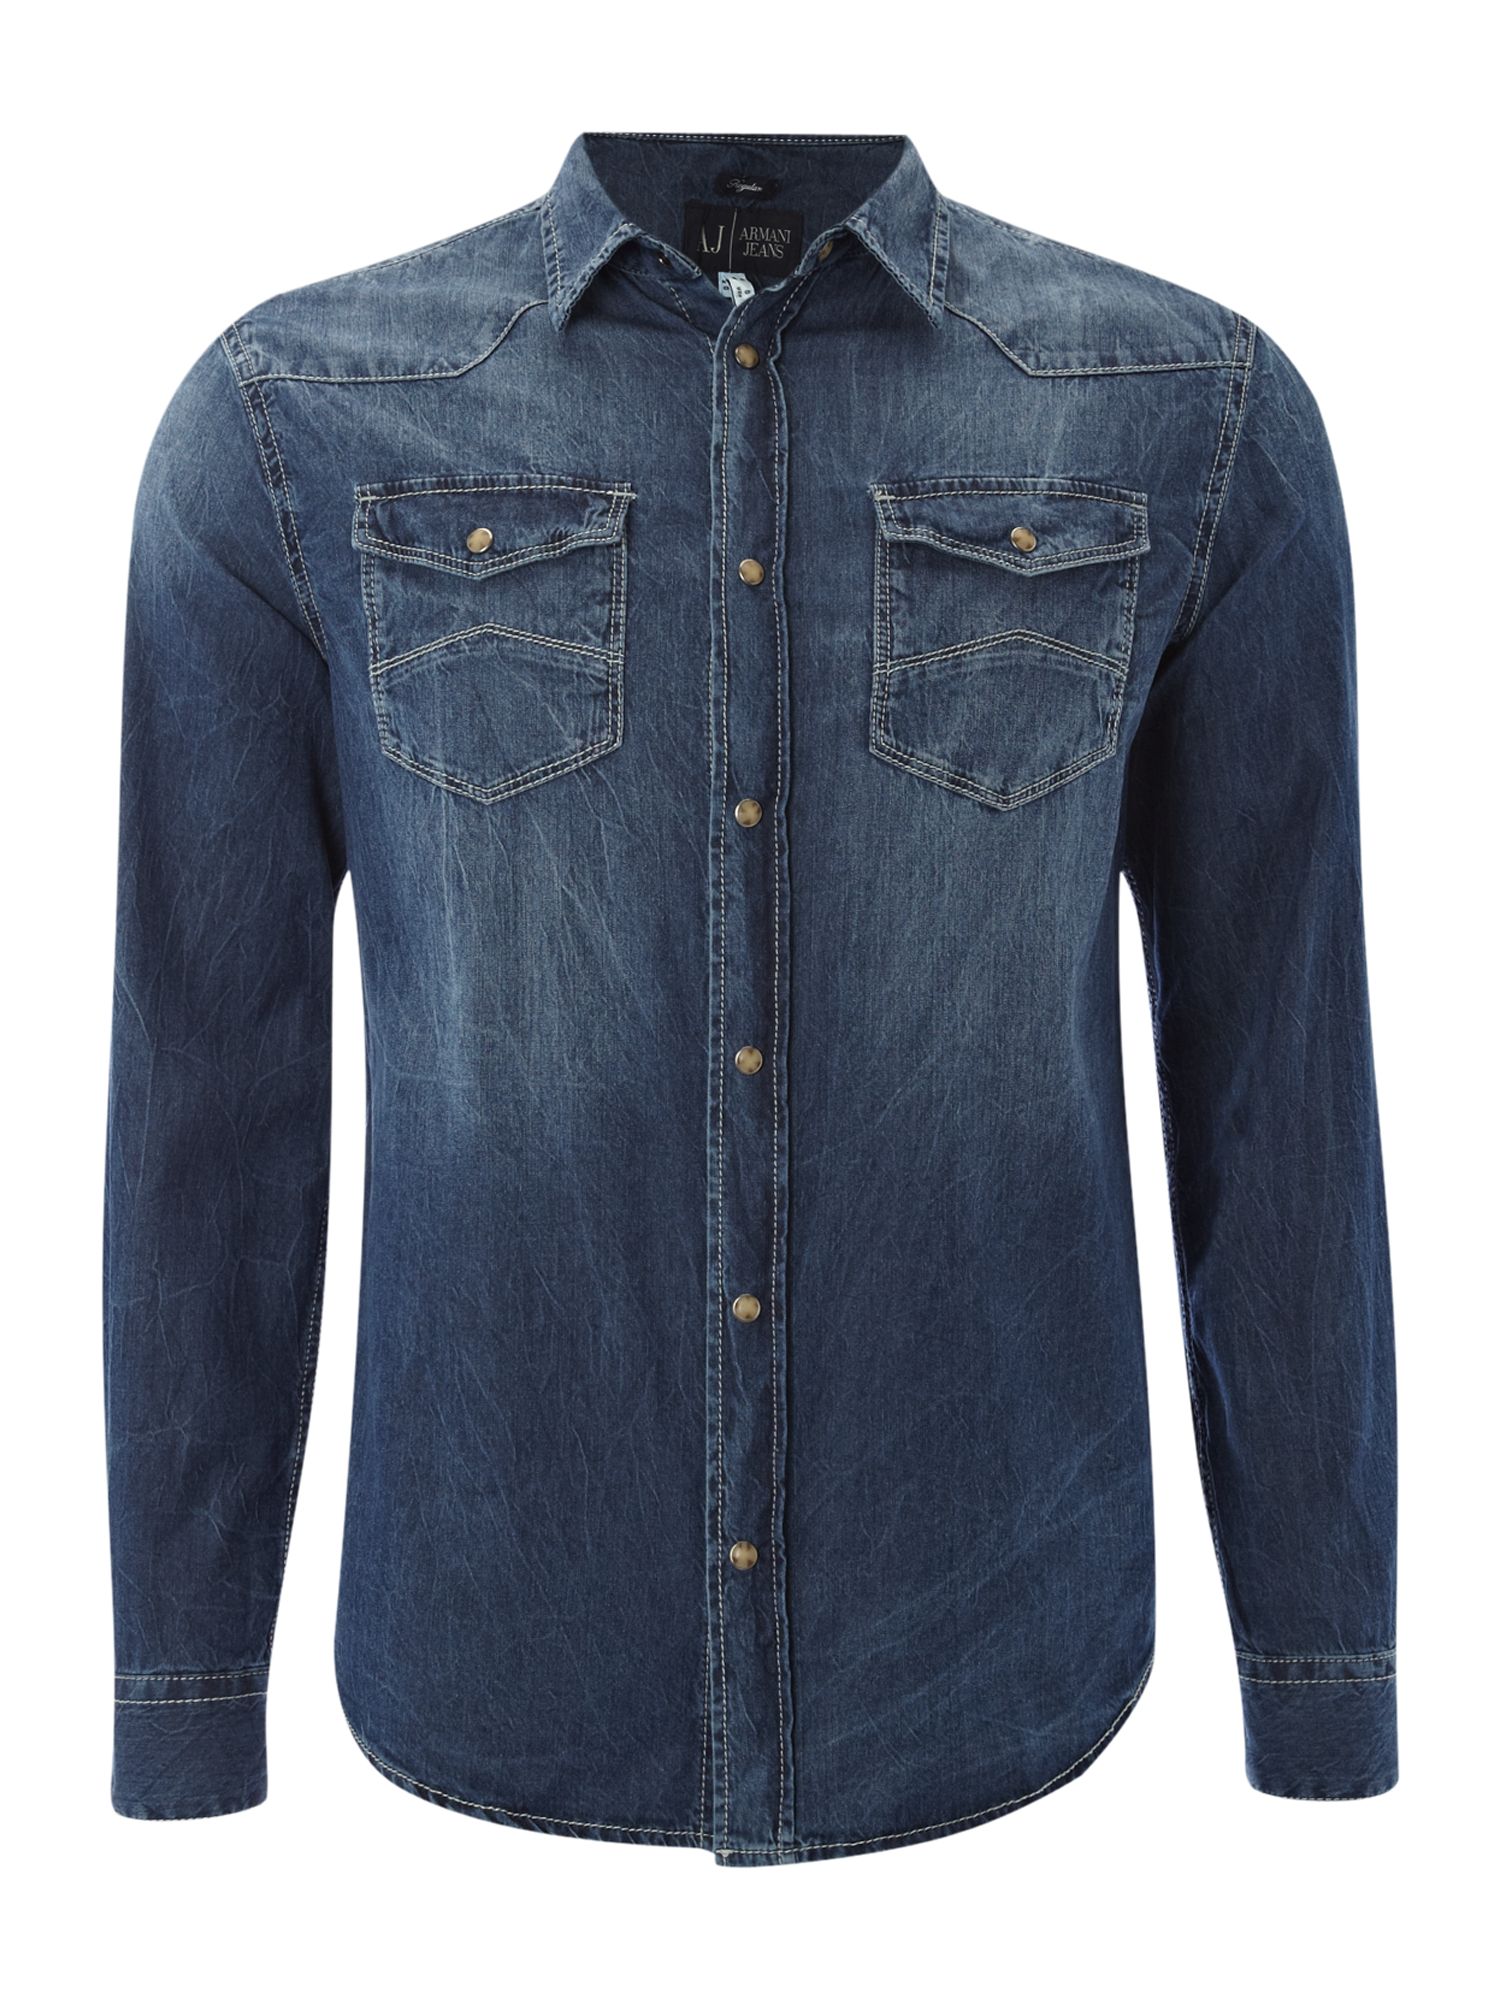 Armani Jeans Denim Long Sleeved Two Pocket Shirt in Blue for Men (Denim